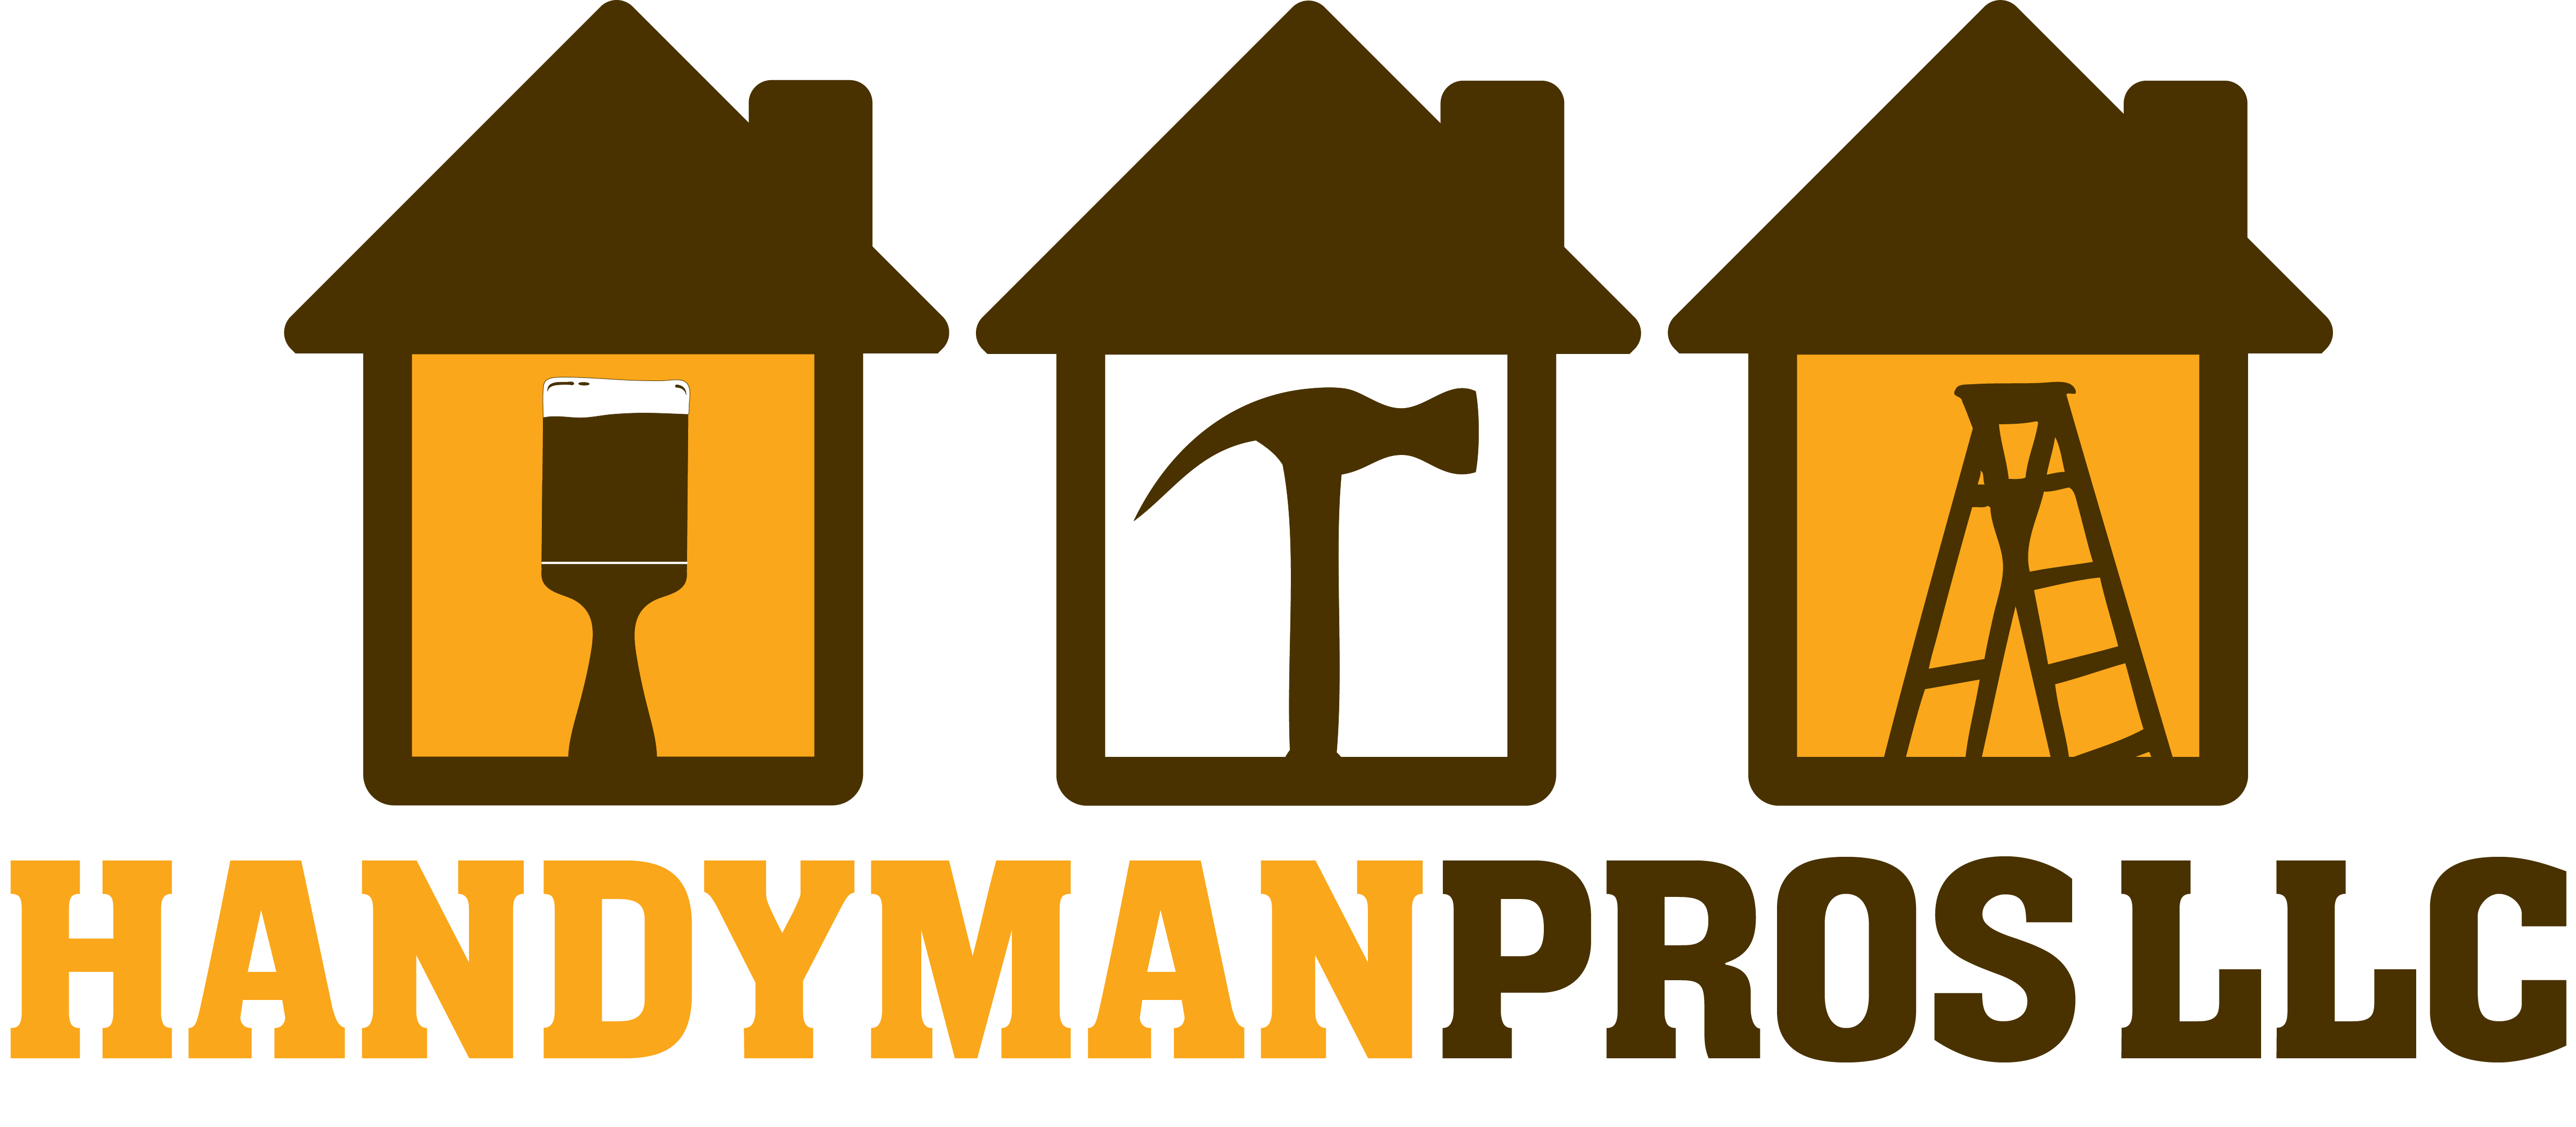 free handyman logo clipart - photo #33